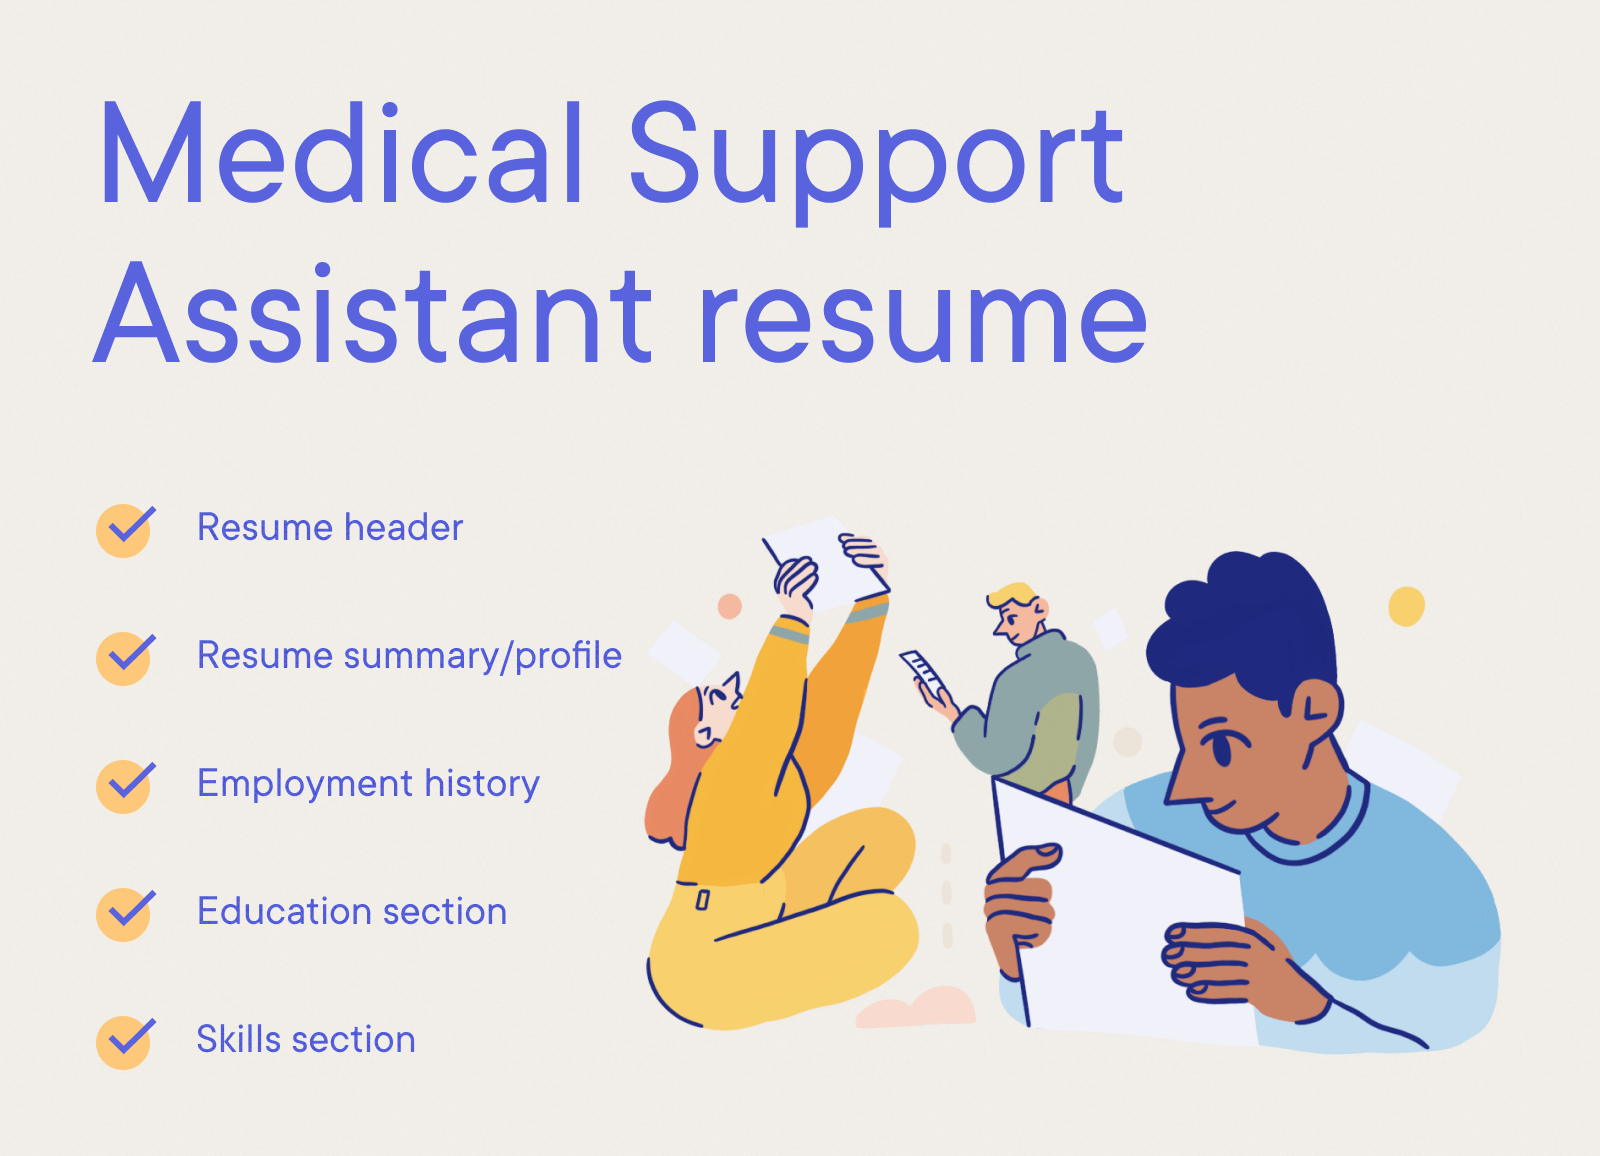 Medical Support Assistant - Medical Support Assistant resume